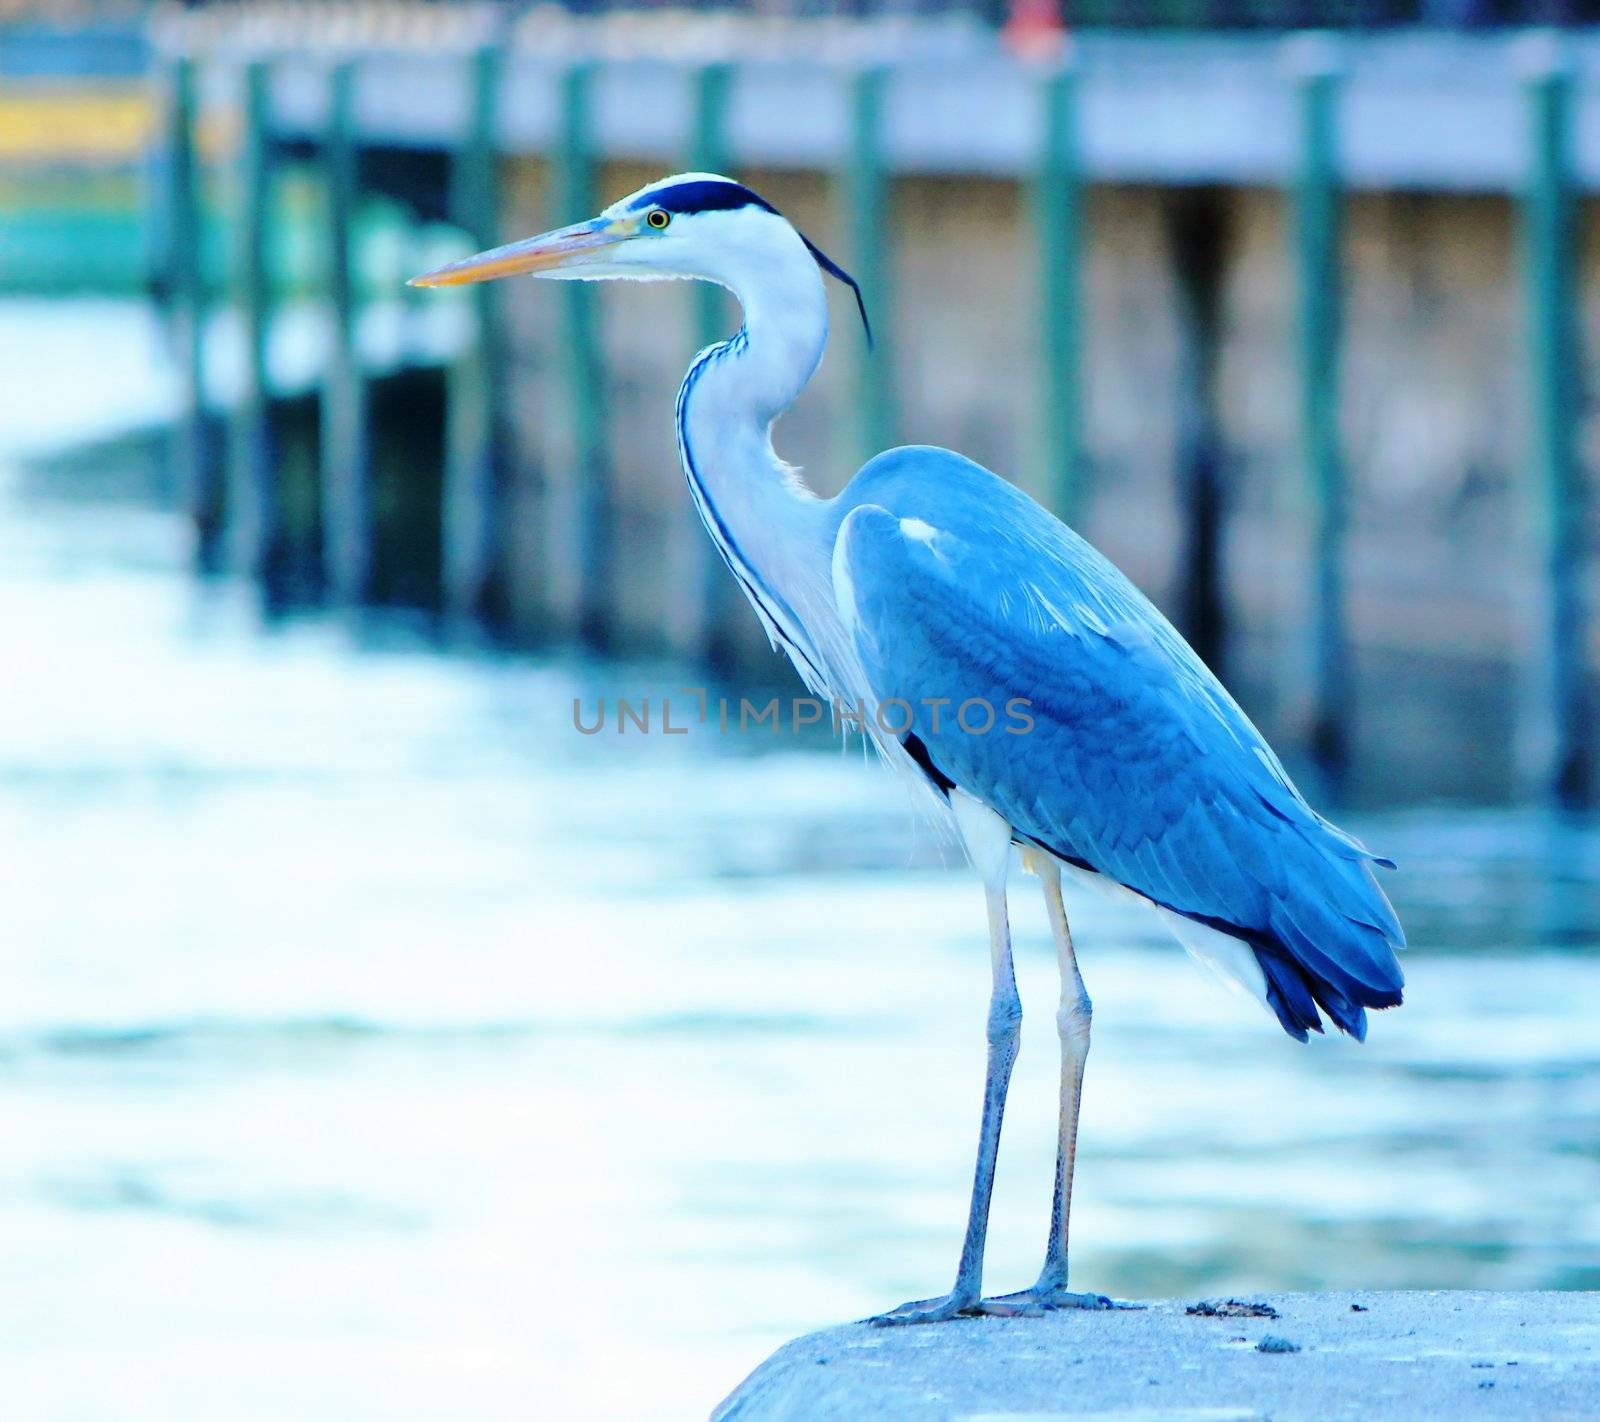 Great blue heron by Elenaphotos21